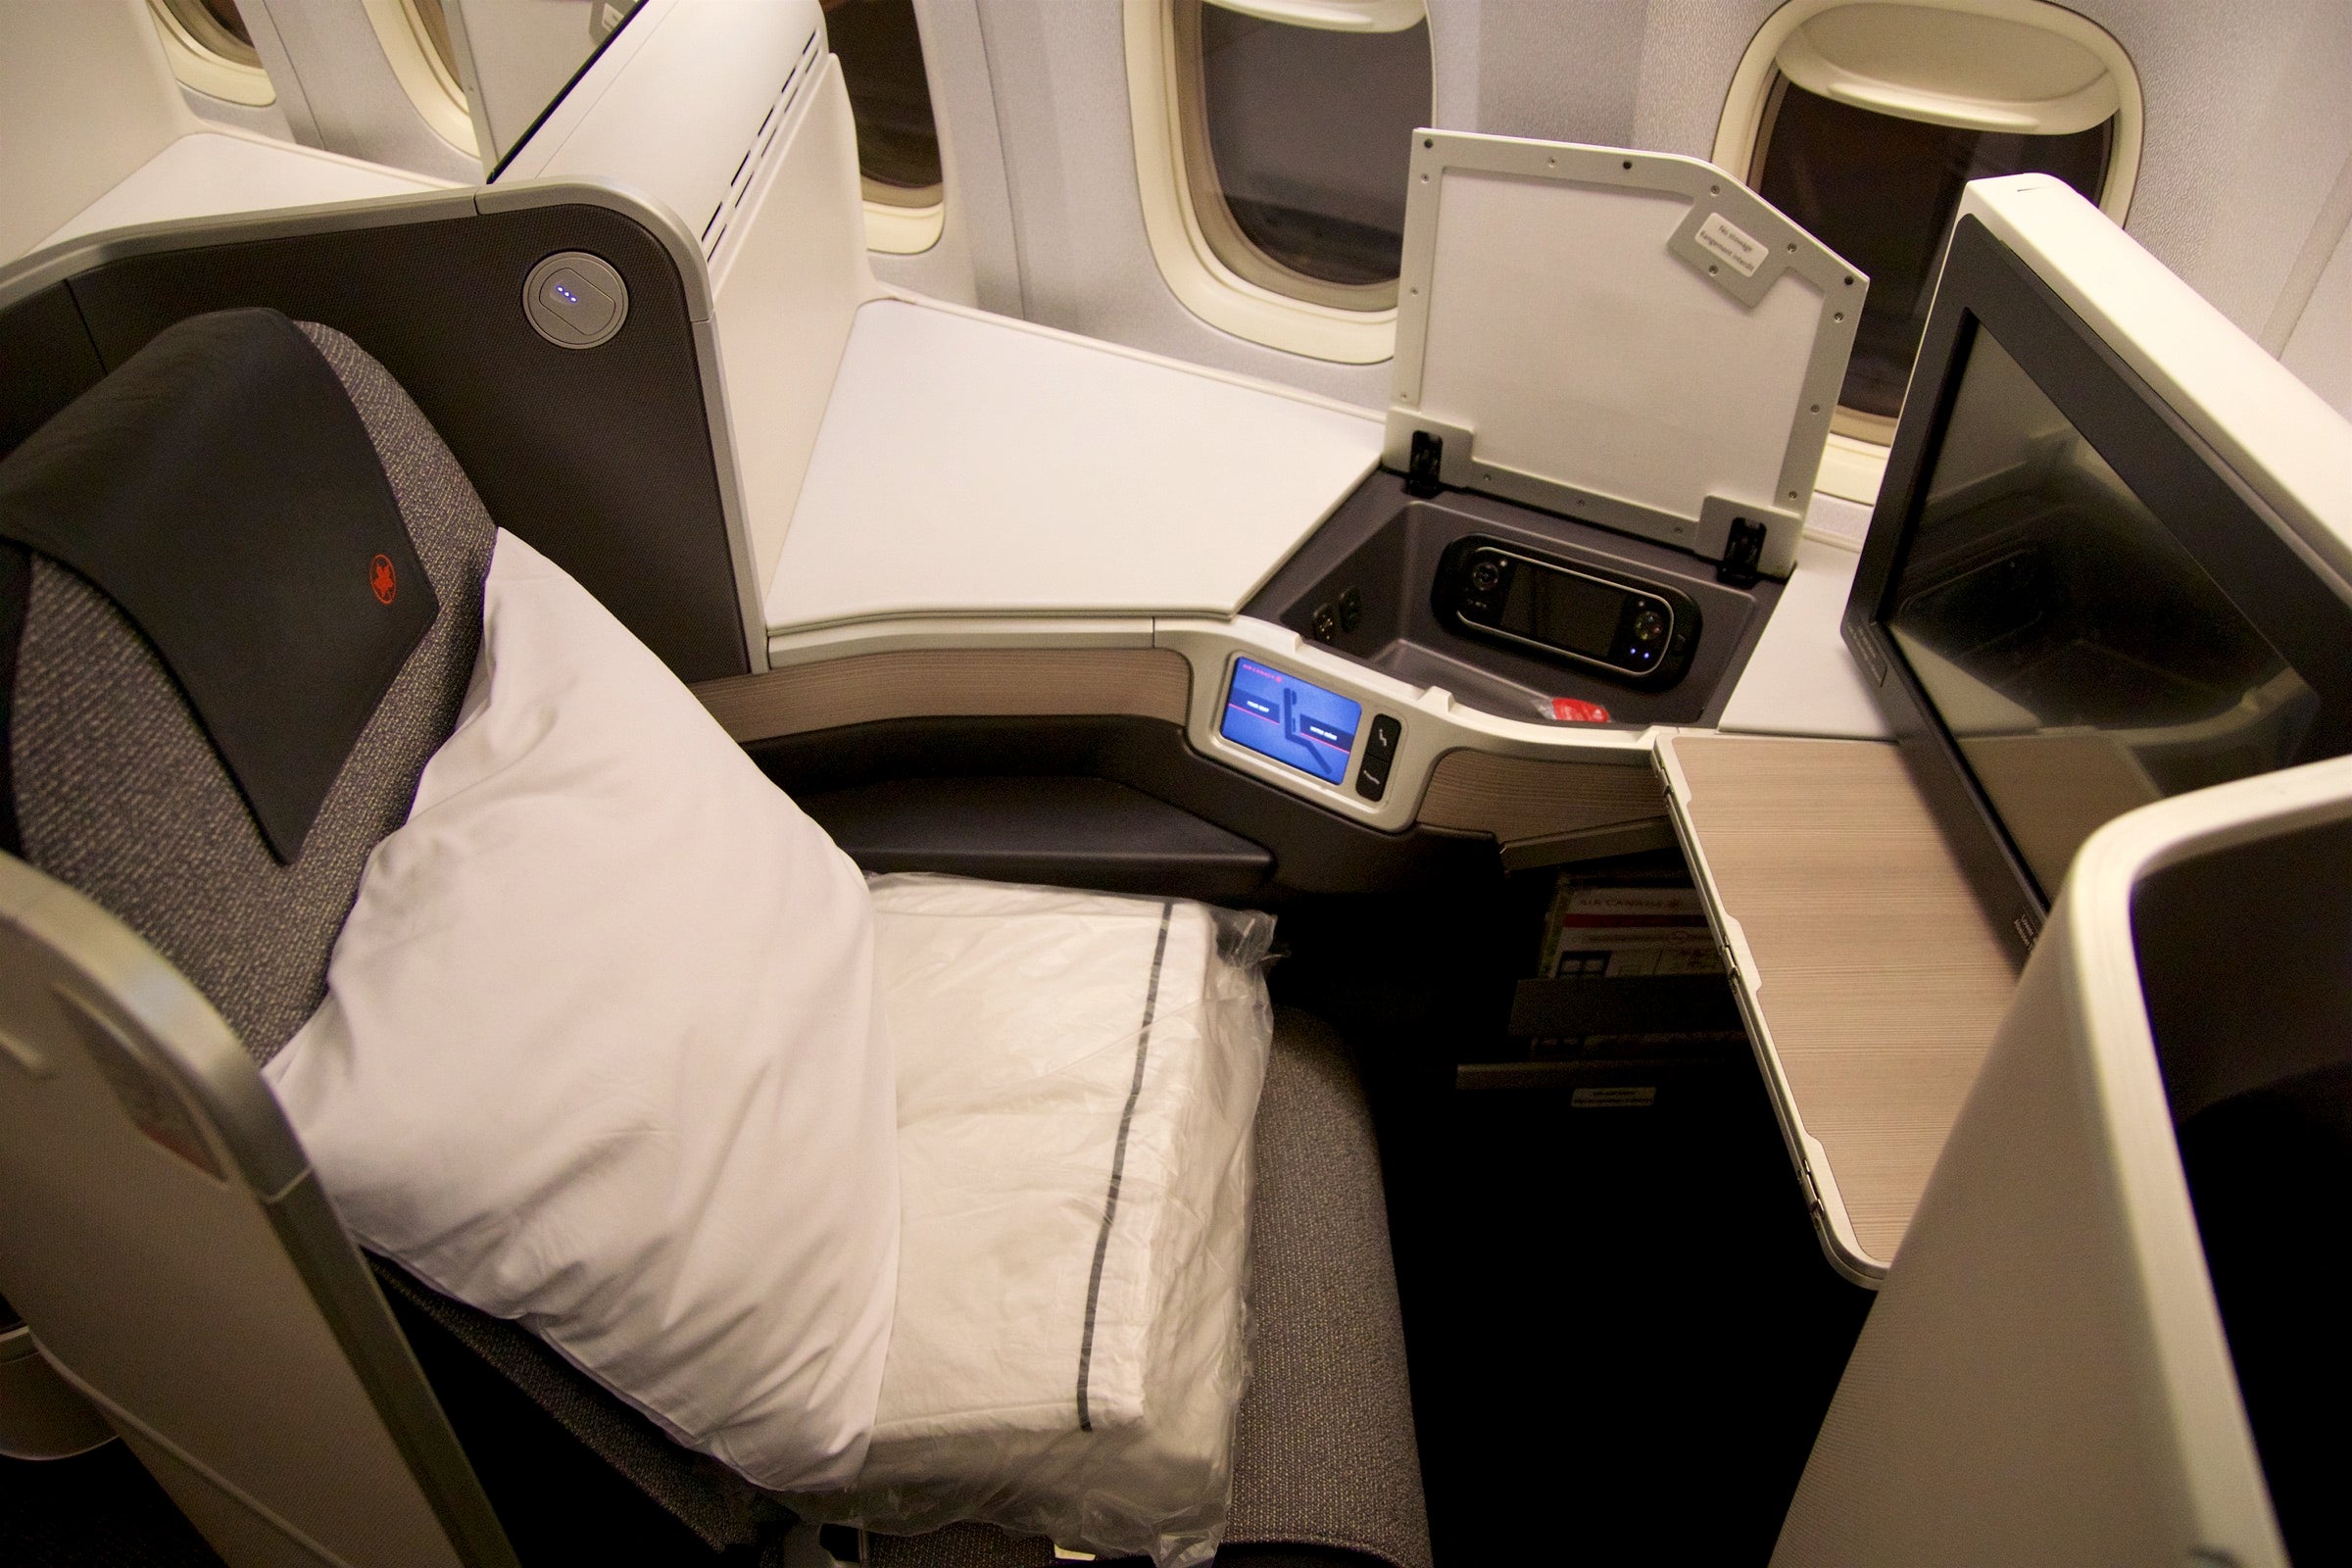 Air Canada 777-300ER business class seat